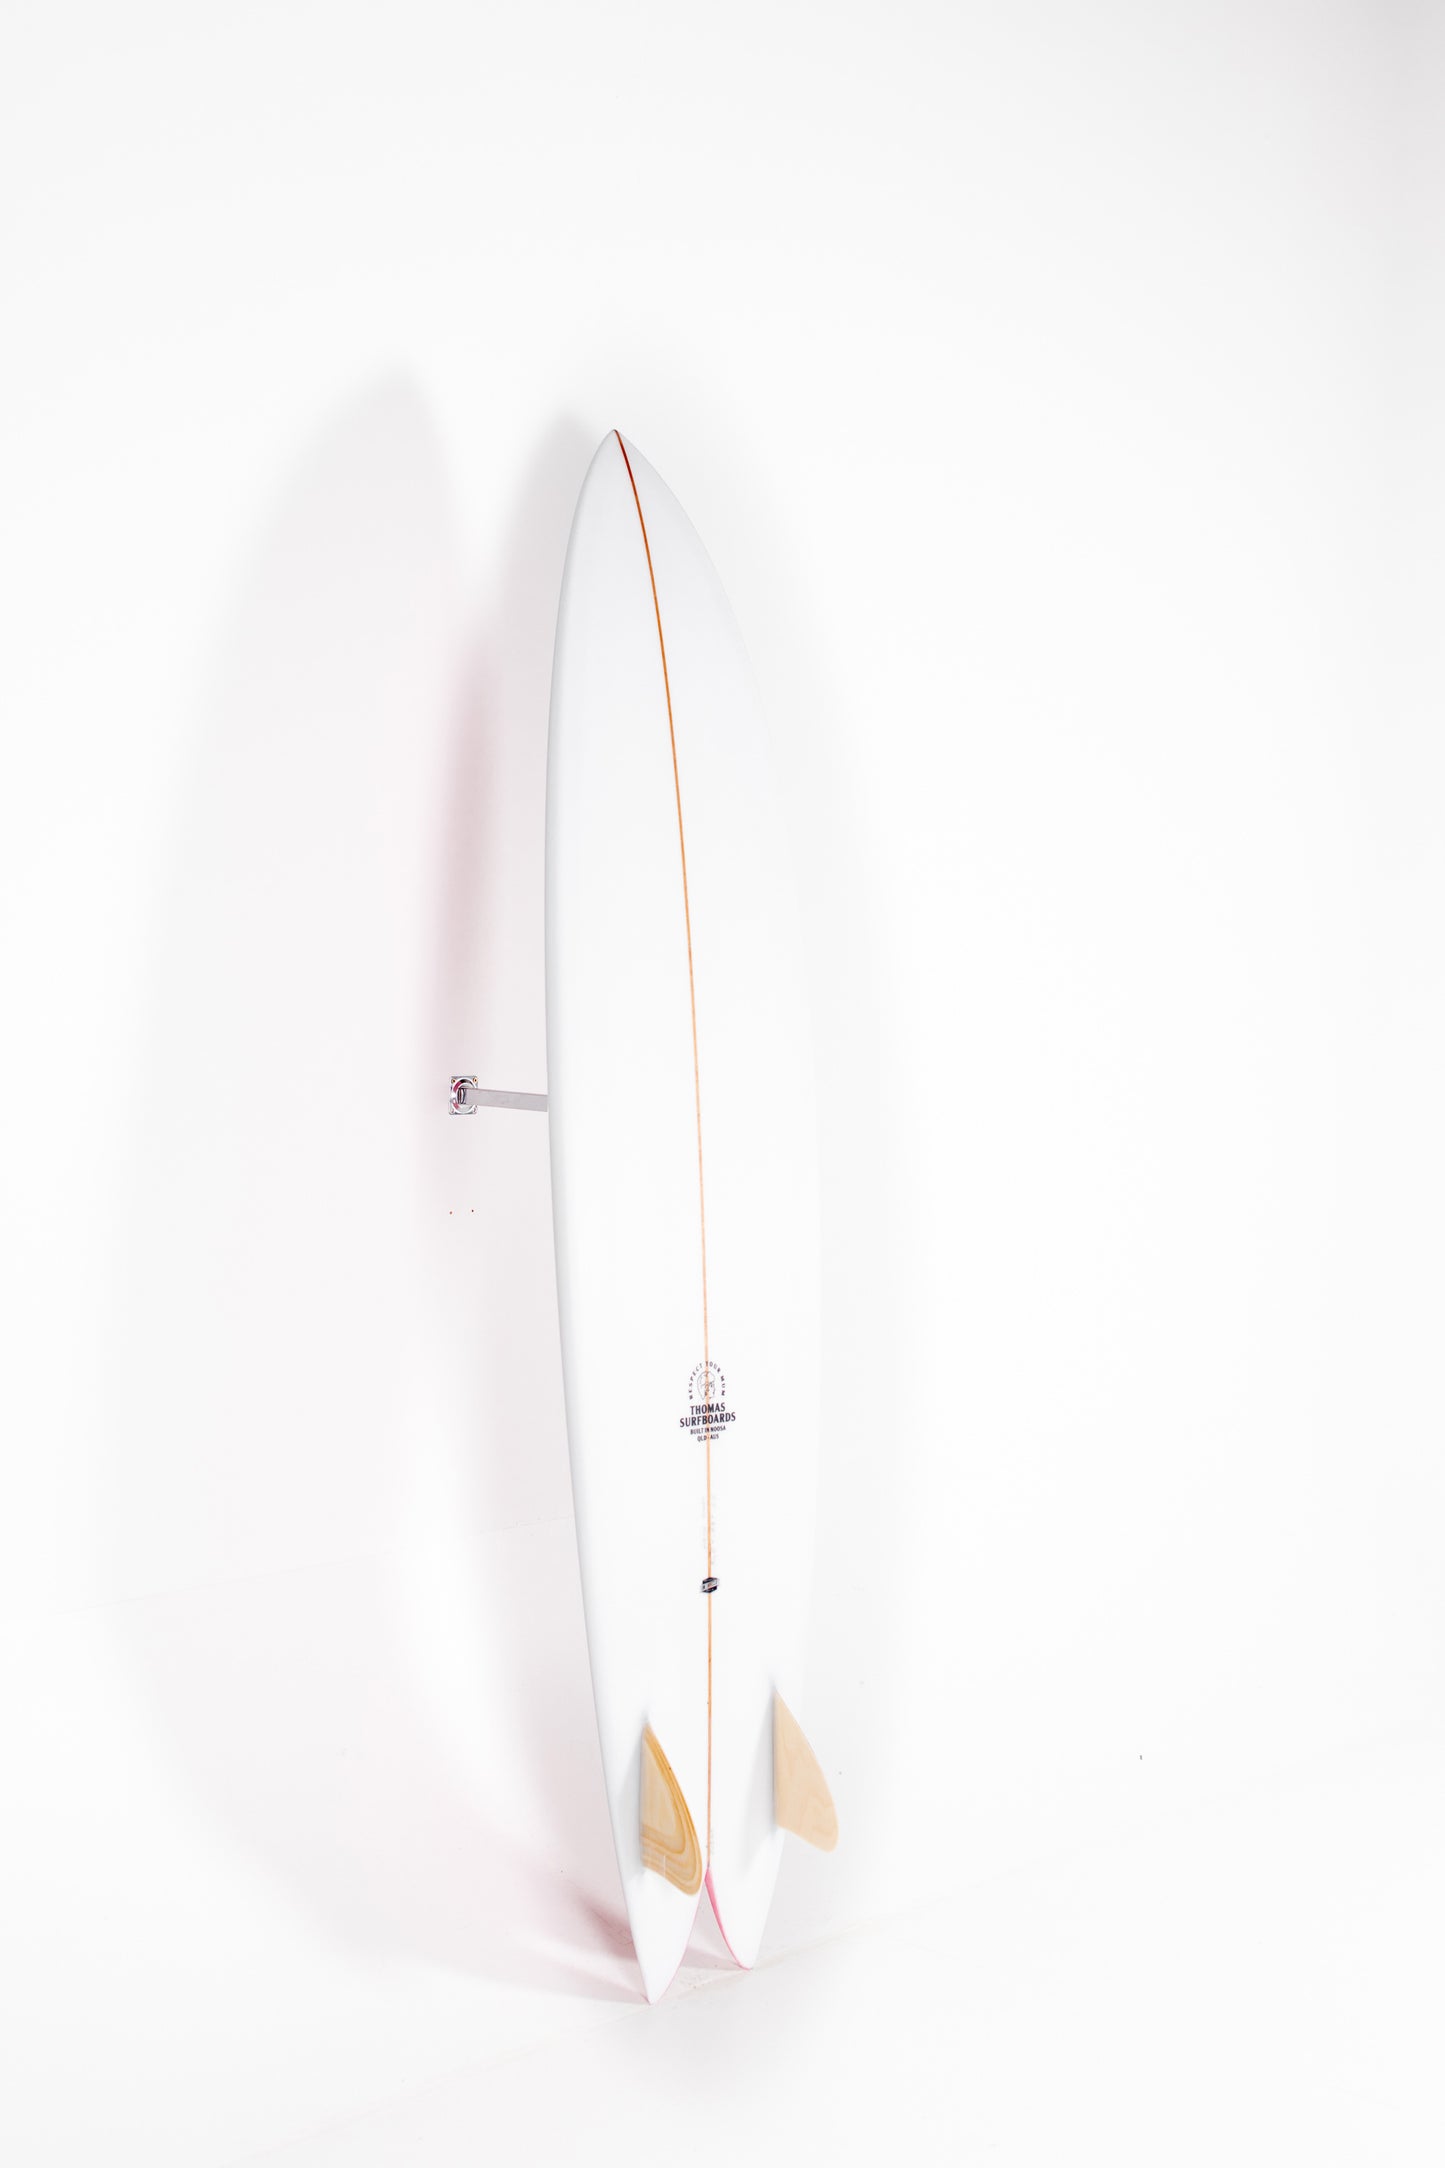 
                  
                    Pukas Surf Shop - Thomas Surfboards - LONG FISH - 7'6"x 22 x 2 7/8 - Ref. LONGFISH76
                  
                